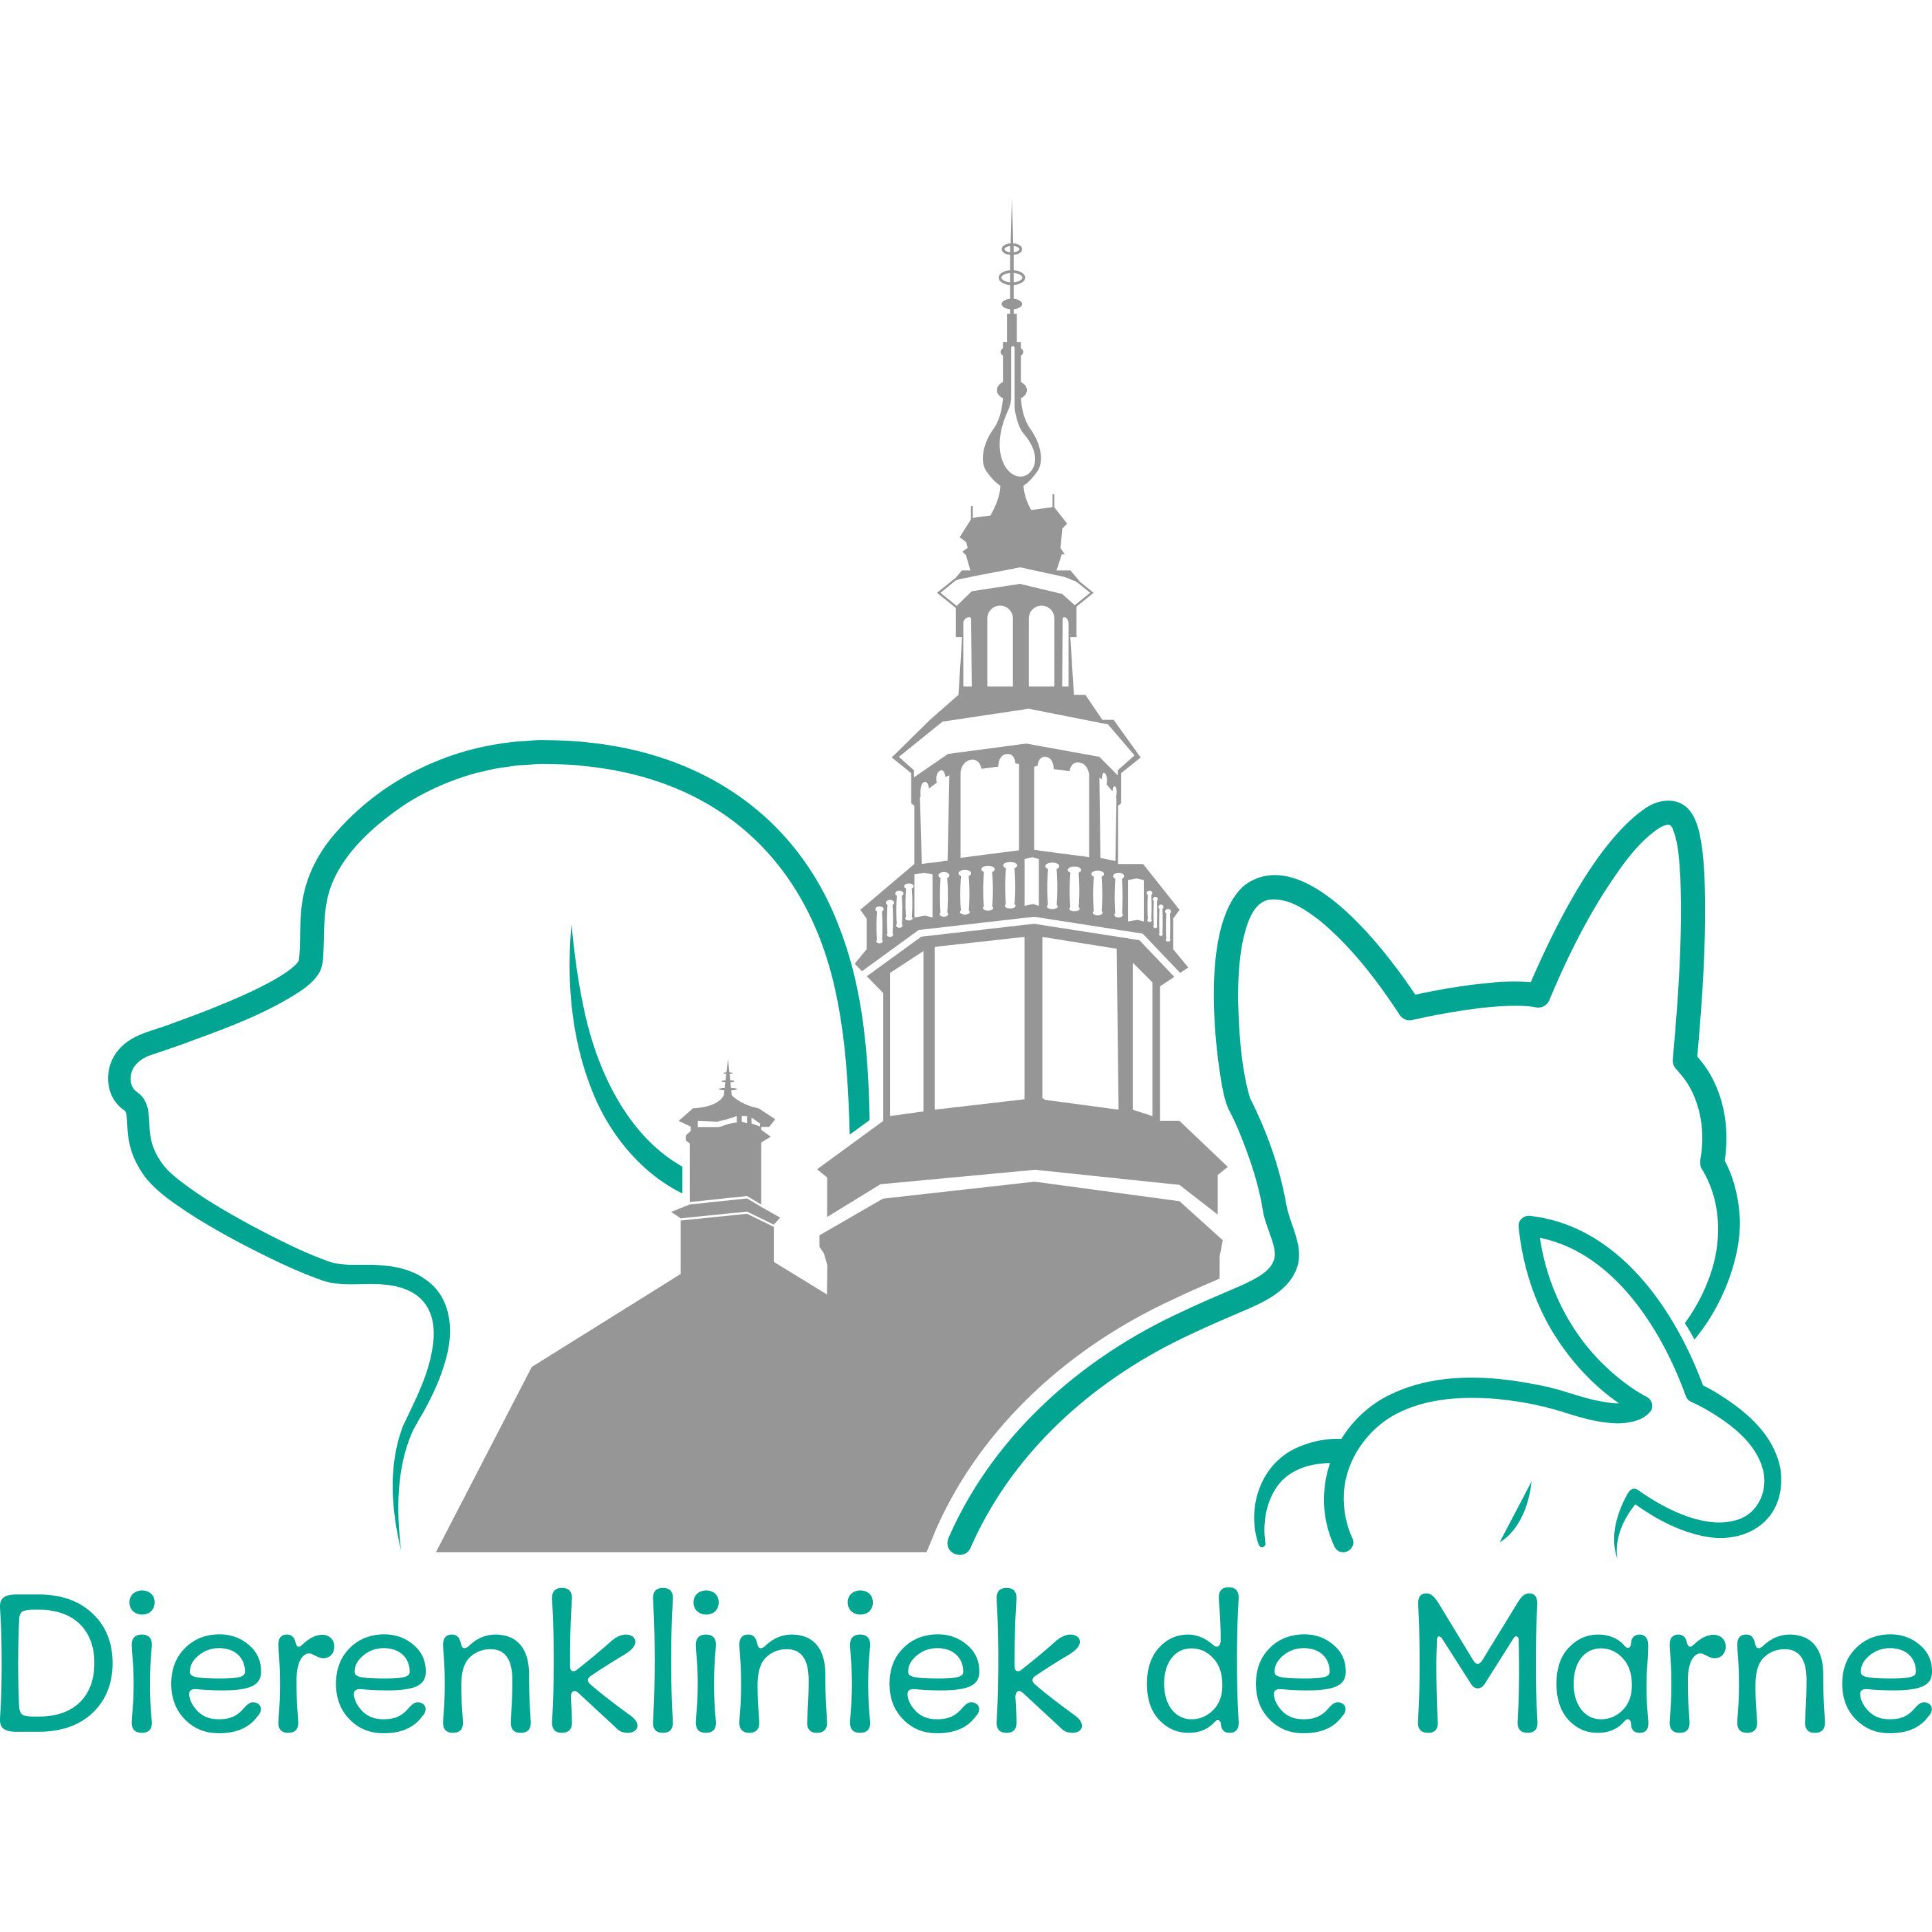 Dierenkliniek De Marne Logo